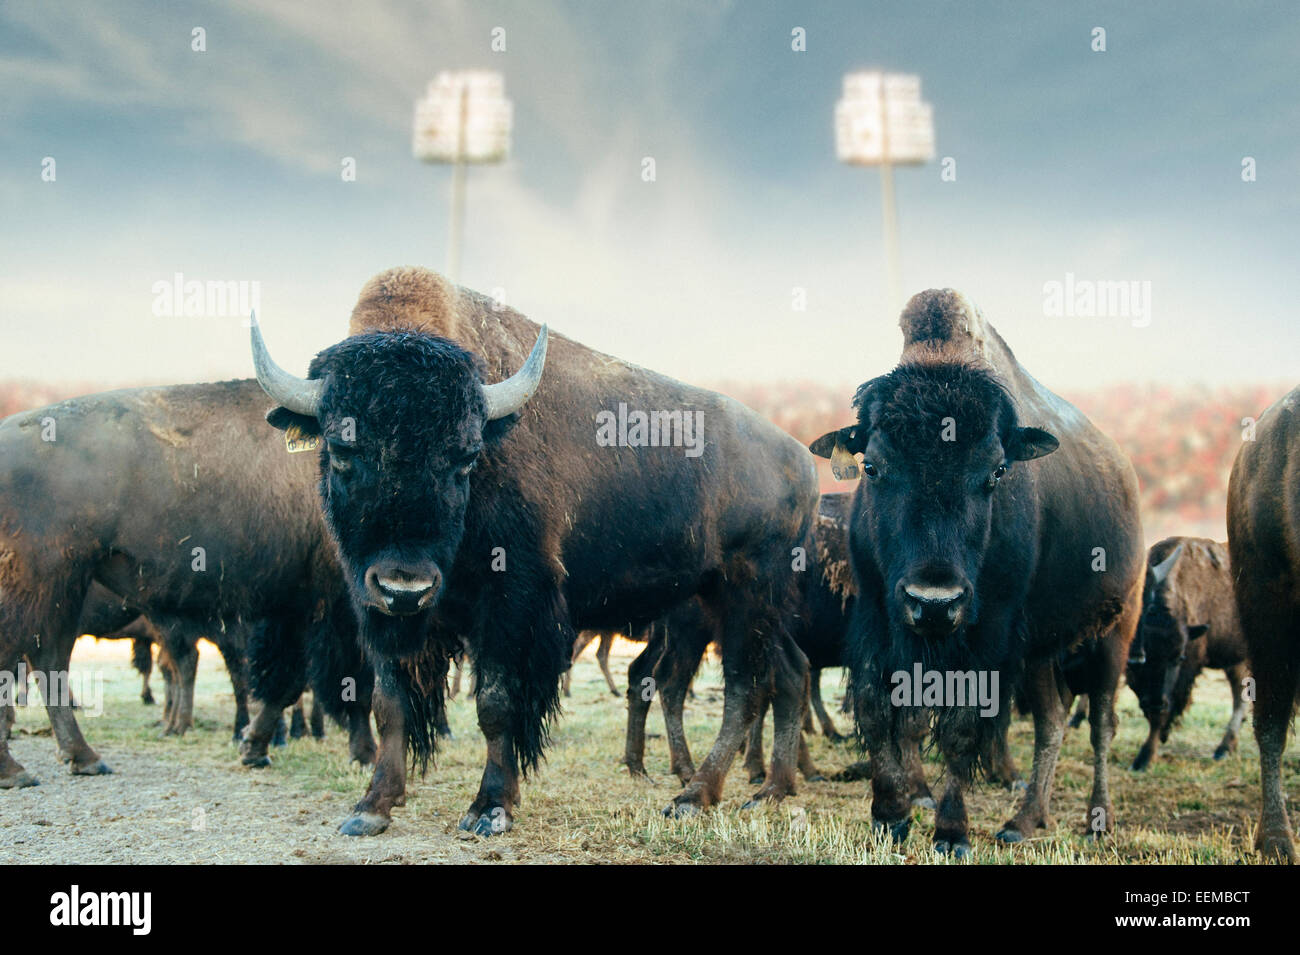 Buffalo herd standing in field at sports stadium Stock Photo